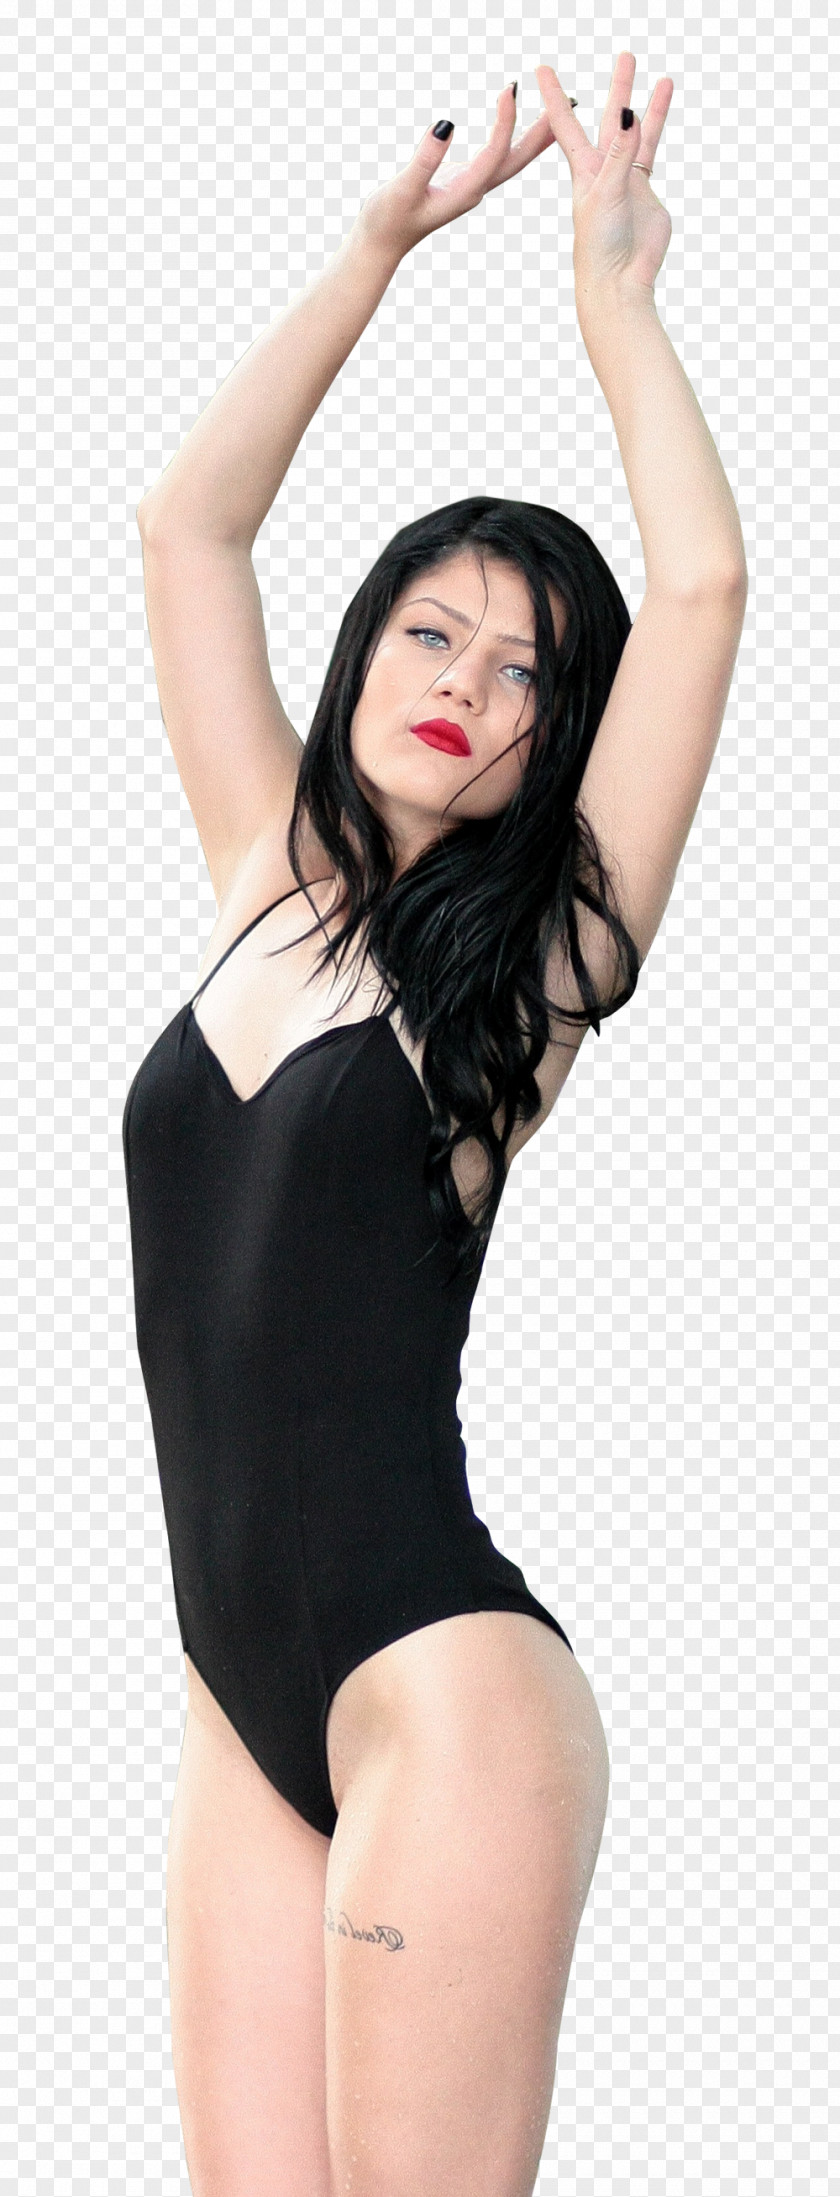 Swimsuit Bikini Woman PNG Woman, Sexy Young Posing In Swimsuit, woman wearing black spaghetti strap monokini clipart PNG